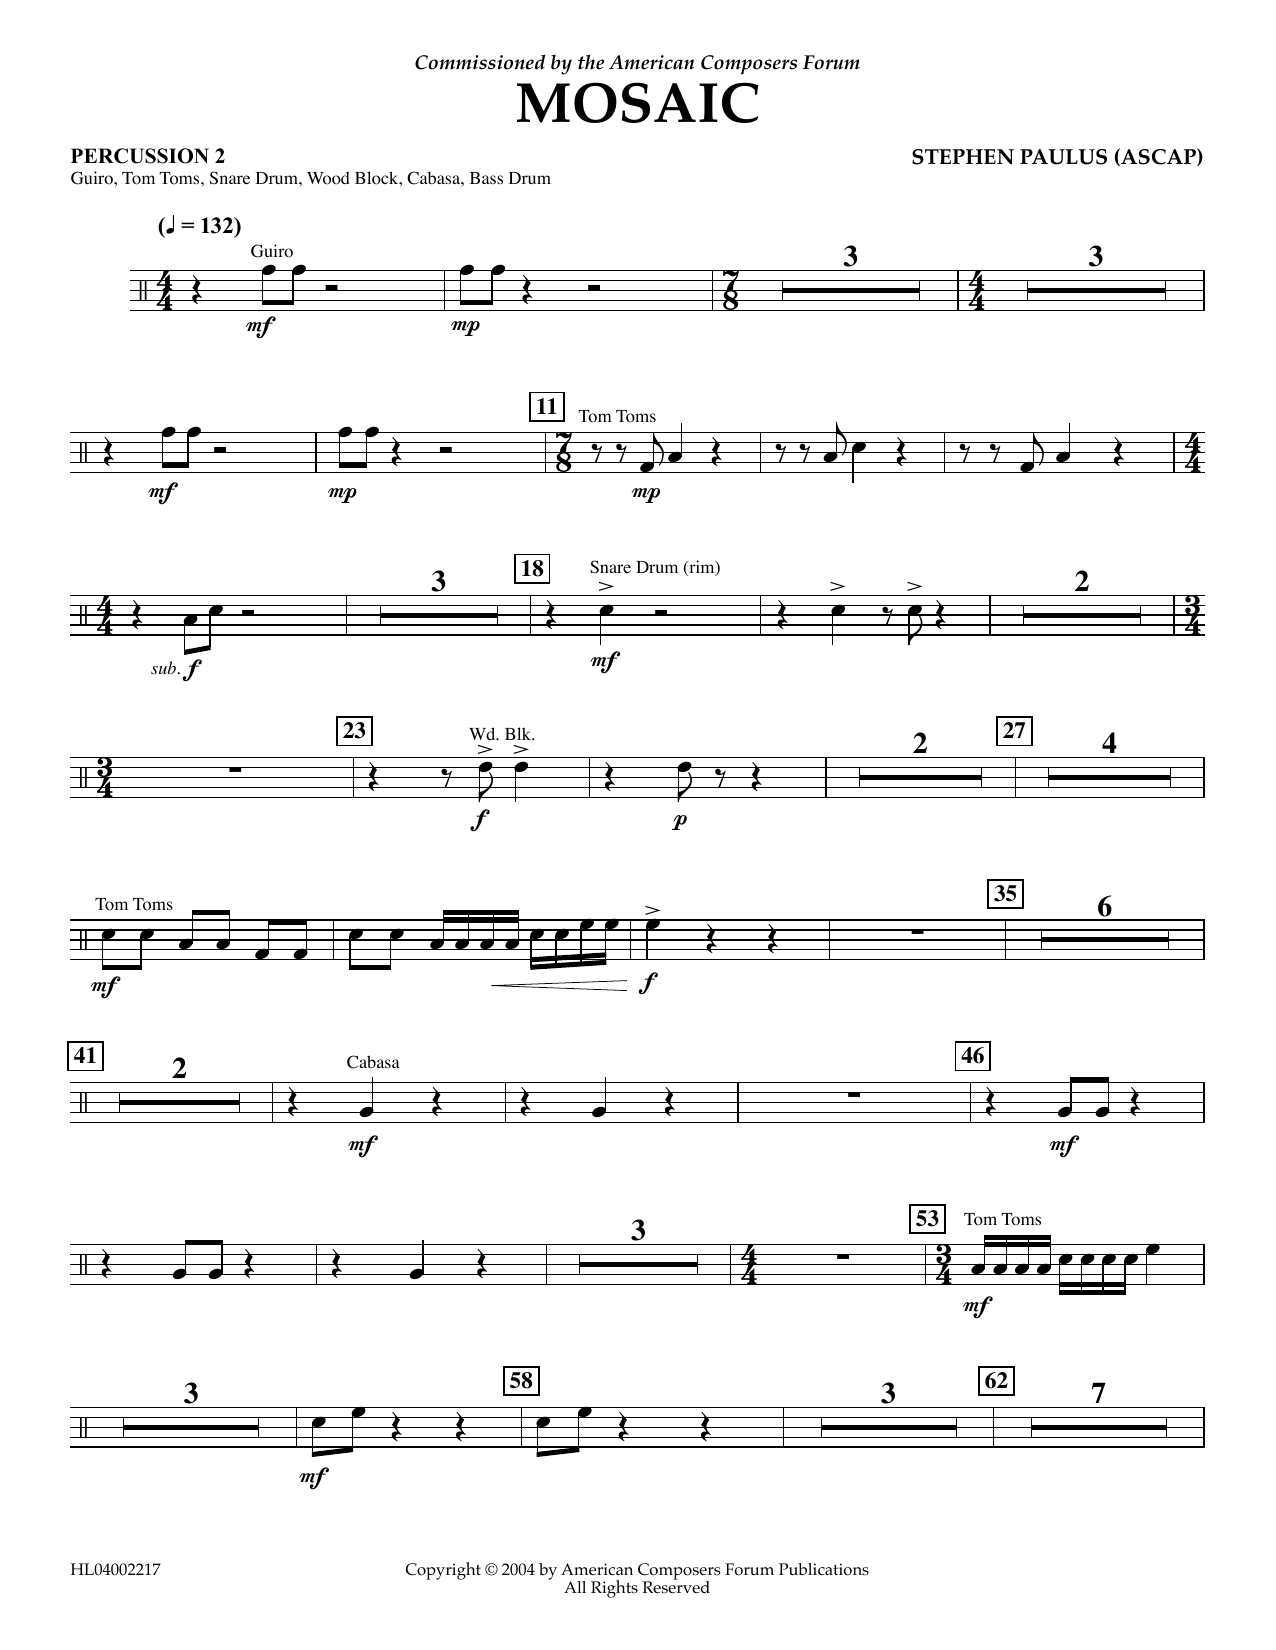 Download Stephen Paulus Mosaic - Percussion 2 Sheet Music